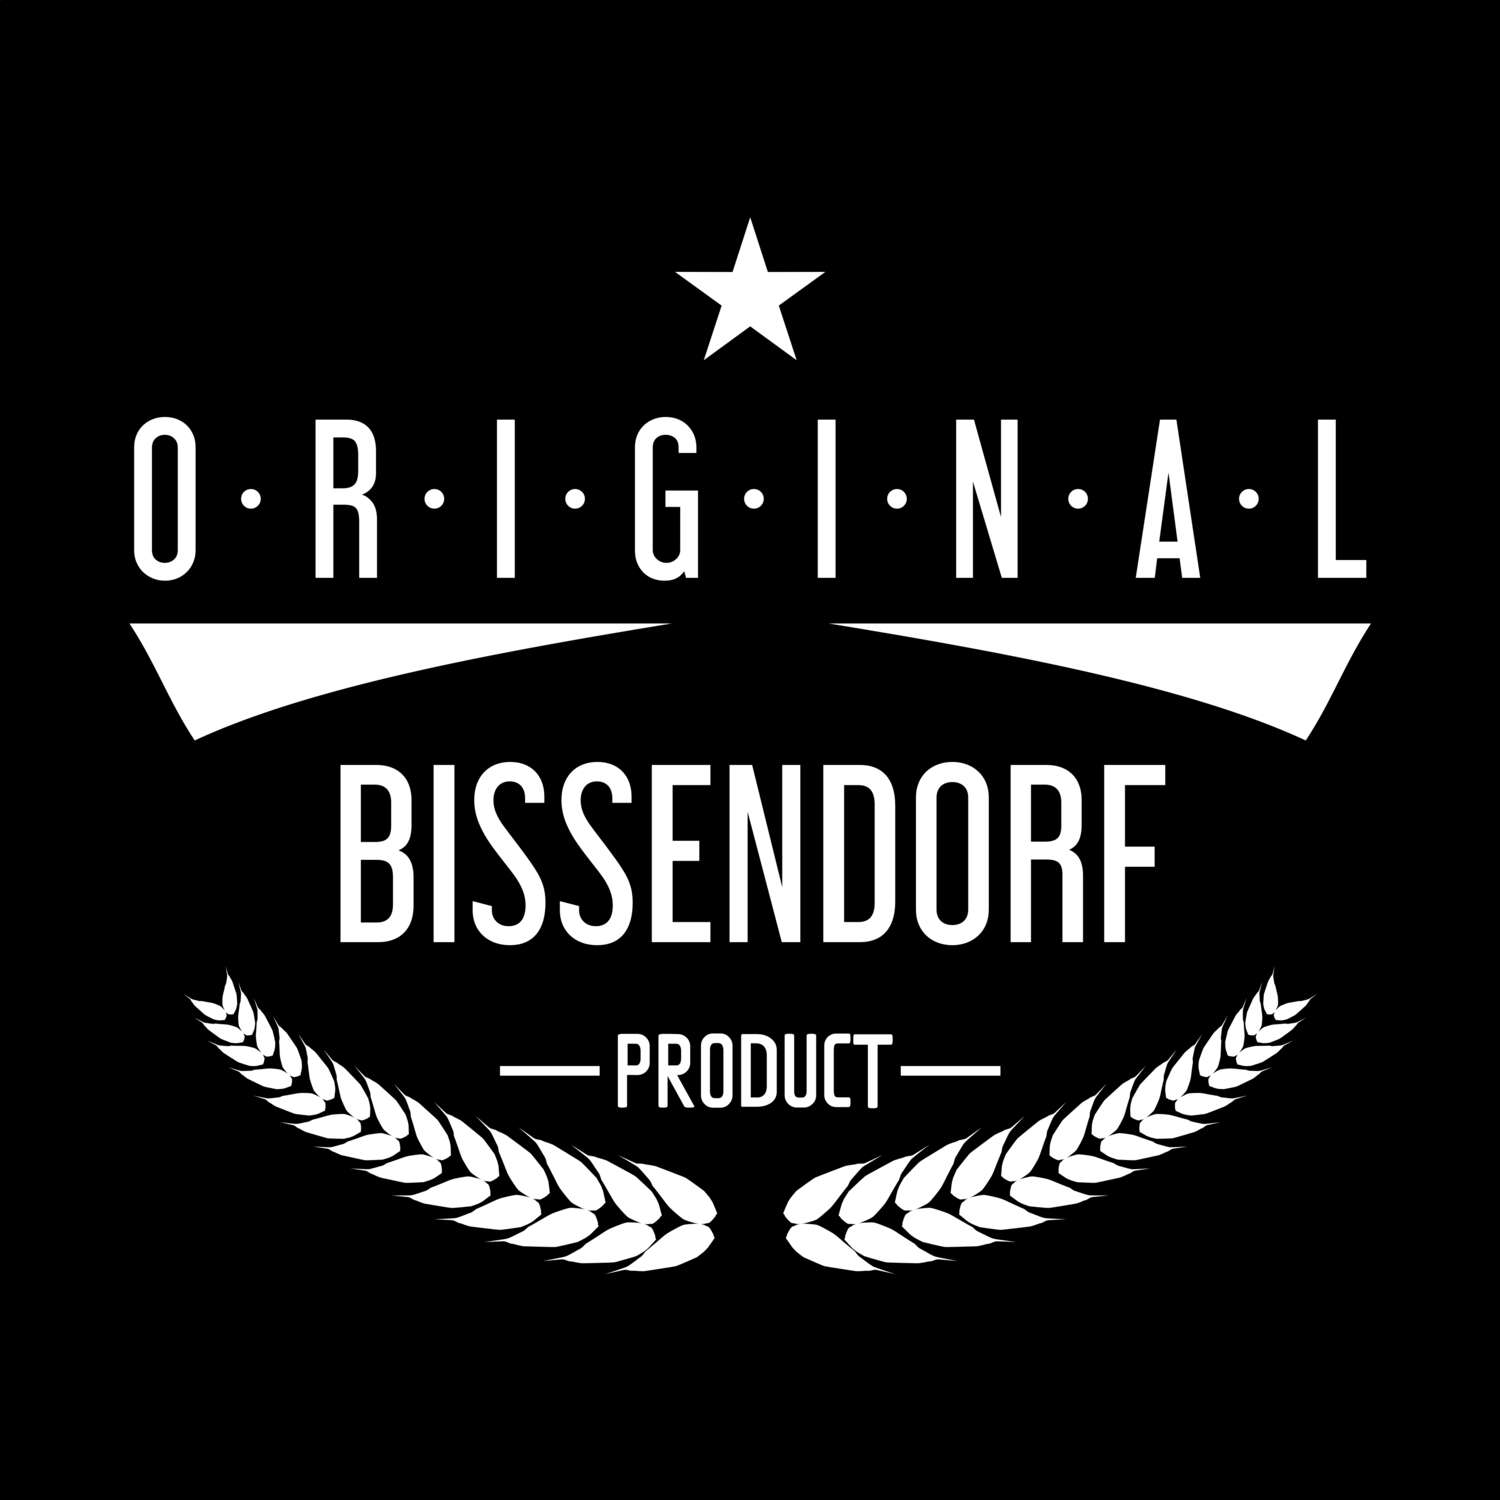 Bissendorf T-Shirt »Original Product«